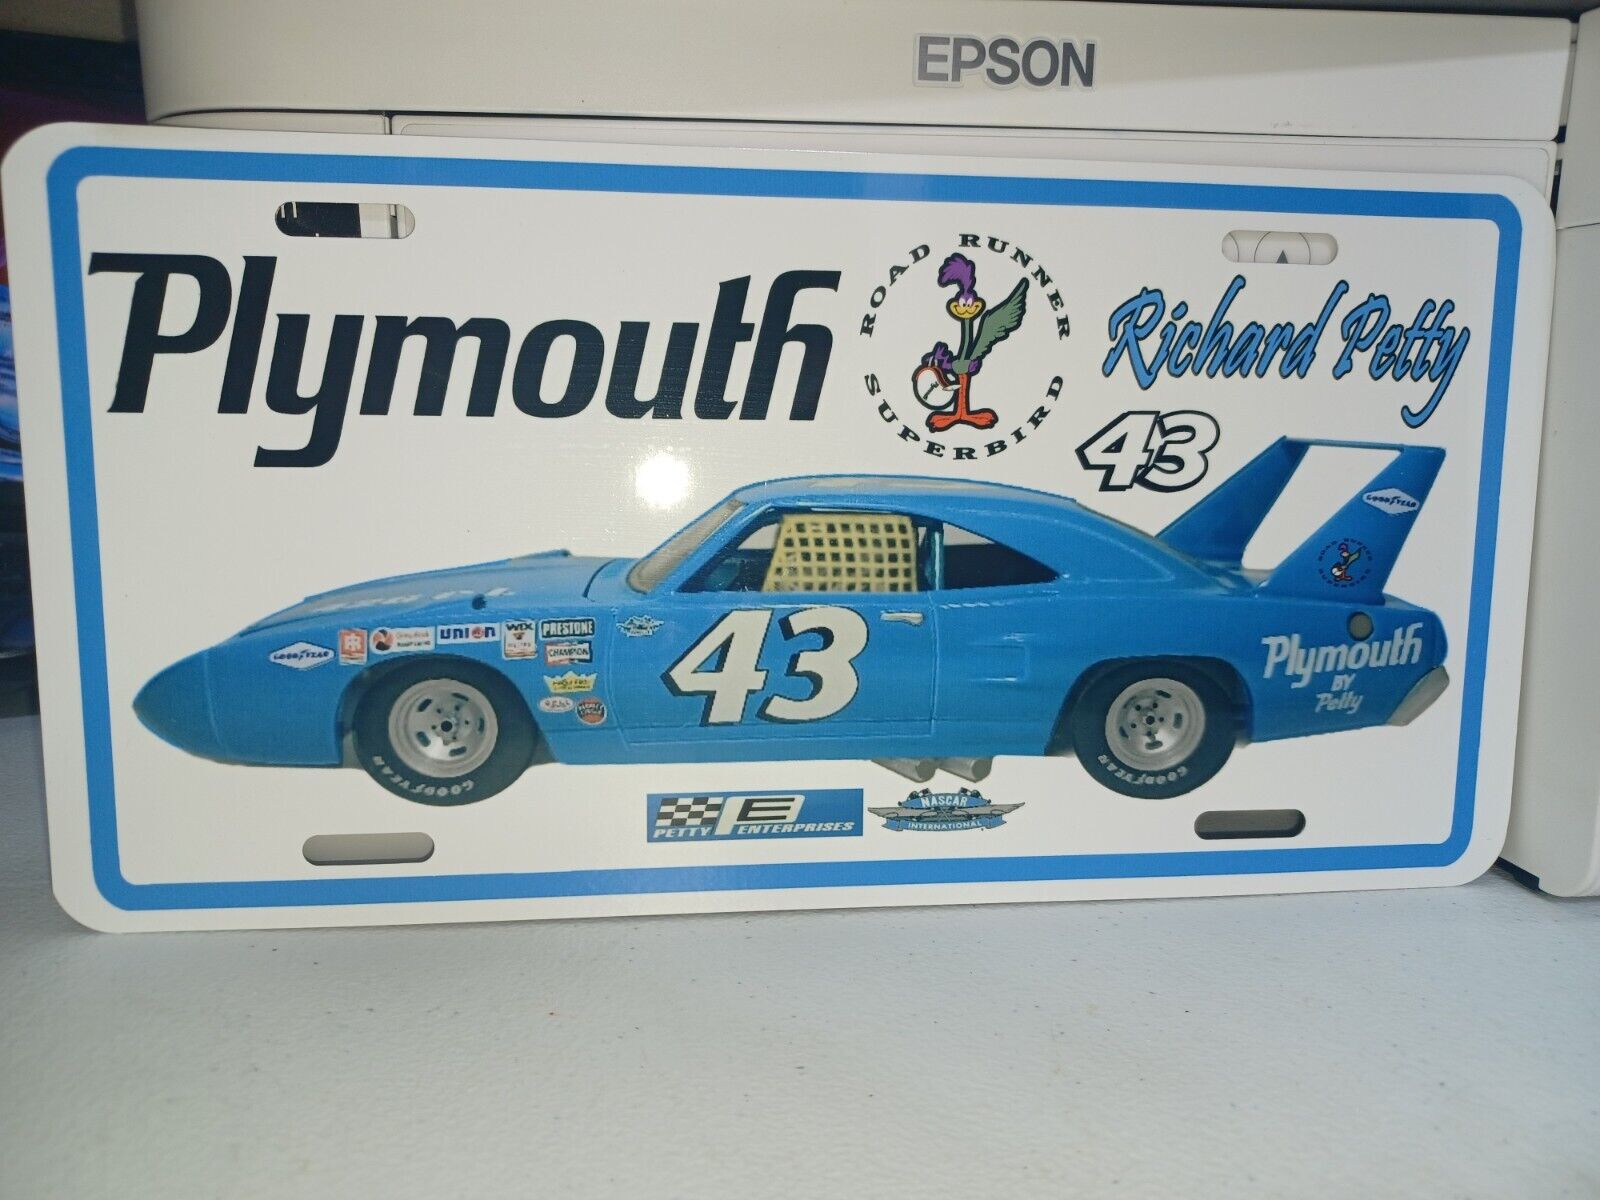 Vintage lookRacing Team Plymouth Richard PETTY - License Plate  1981 